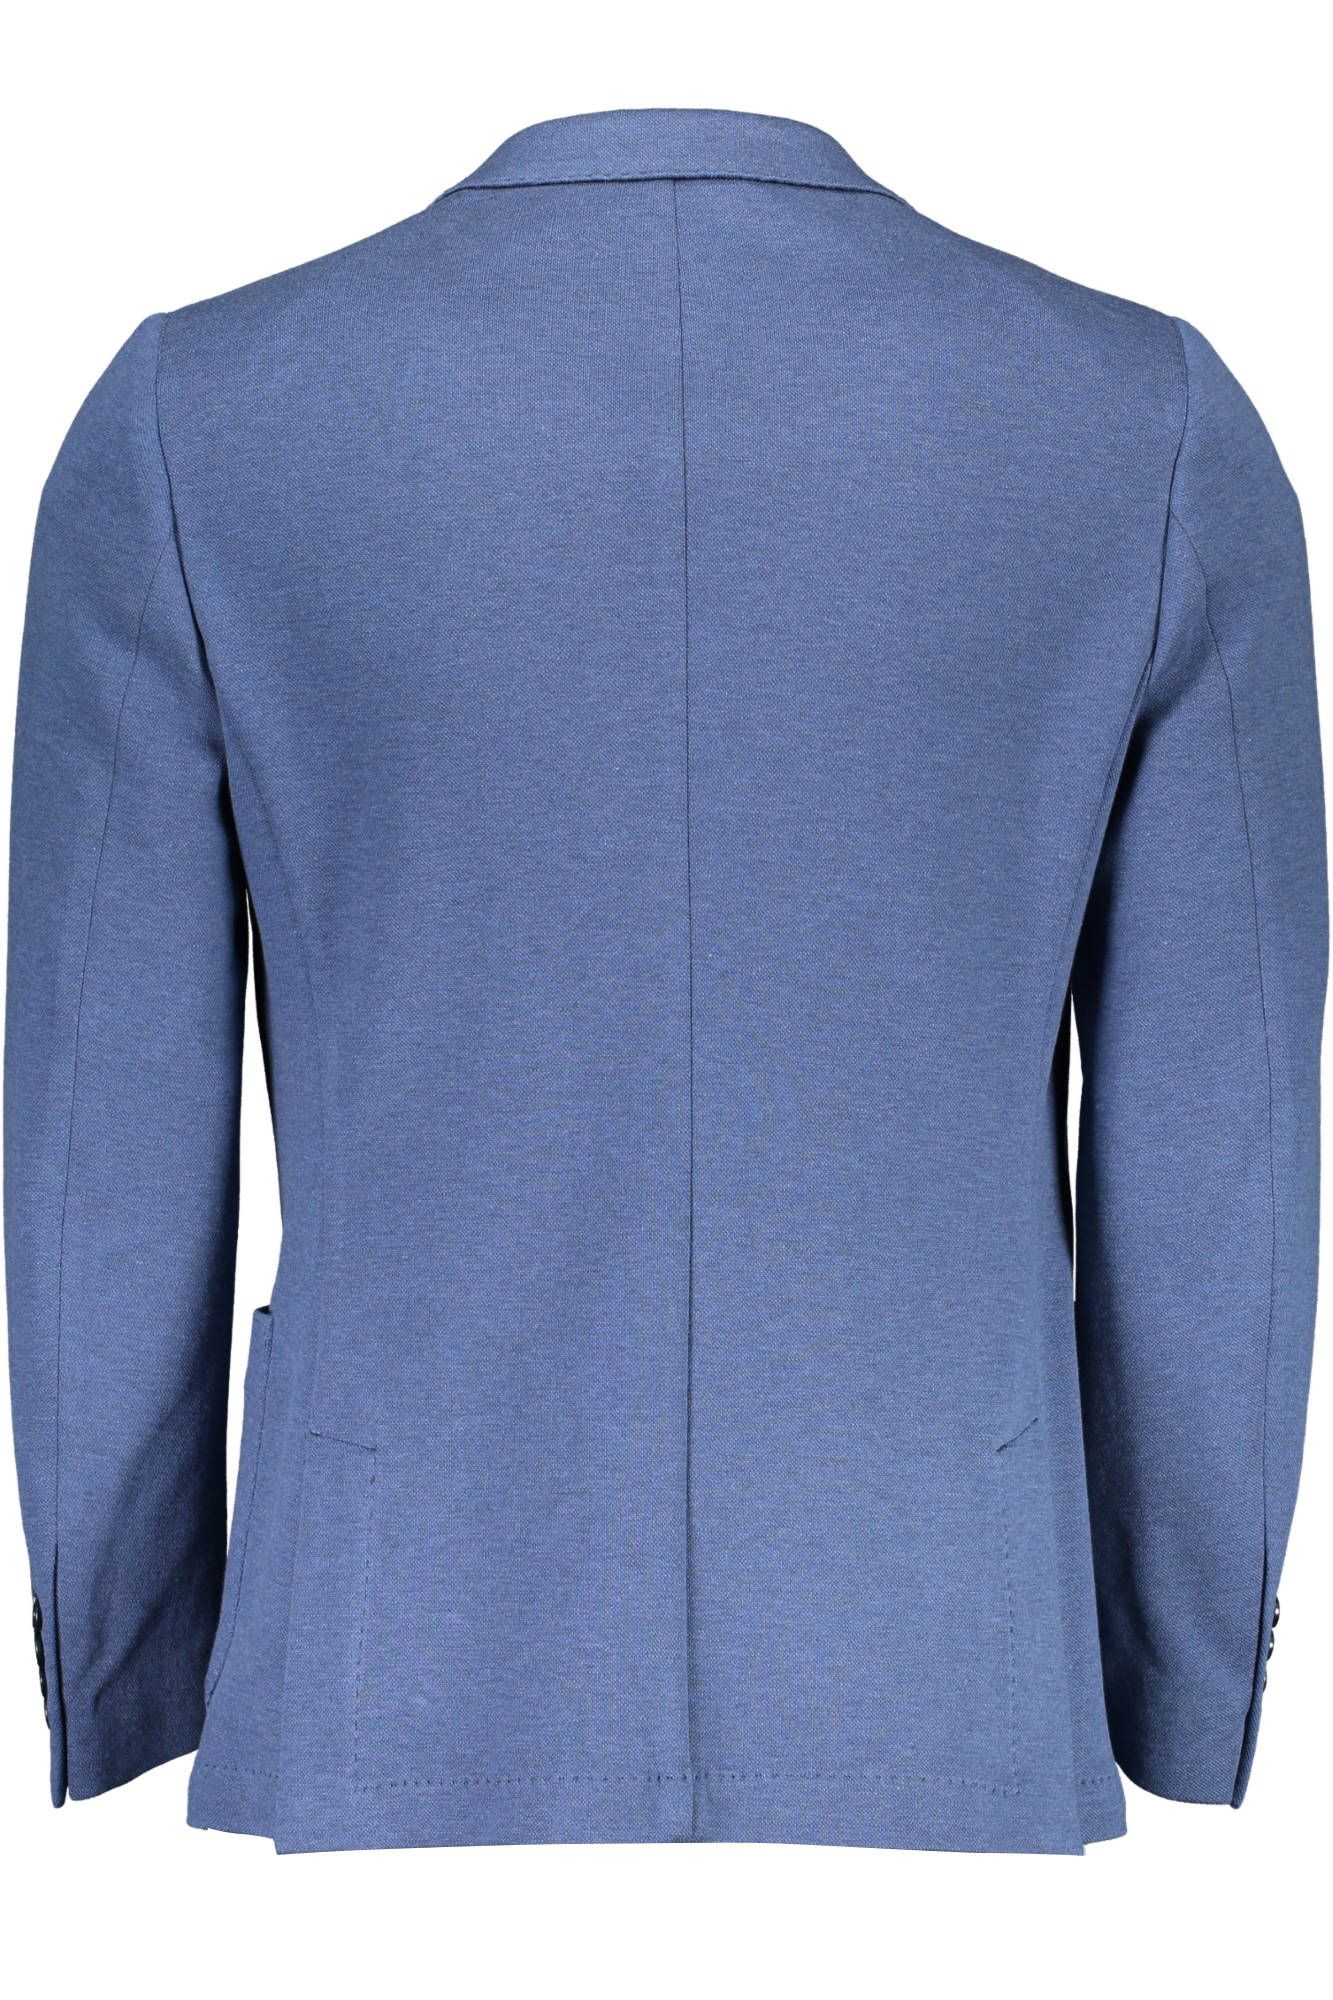 Elegant Cotton Blend Blue Jacket - Divitiae Glamour